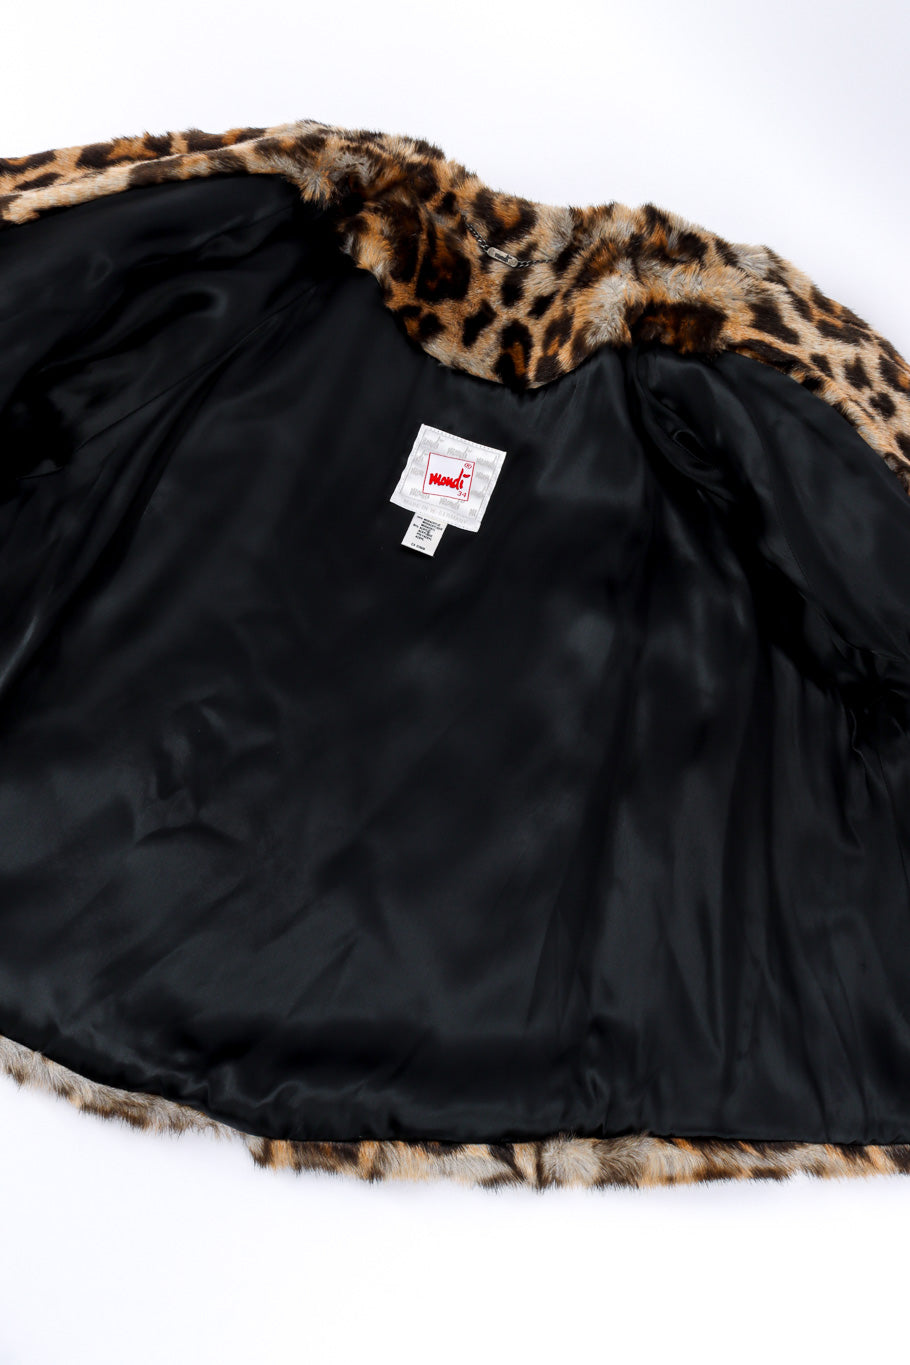 Vintage Mondi Leopard Print Faux Fur Jacket view of lining @recessla